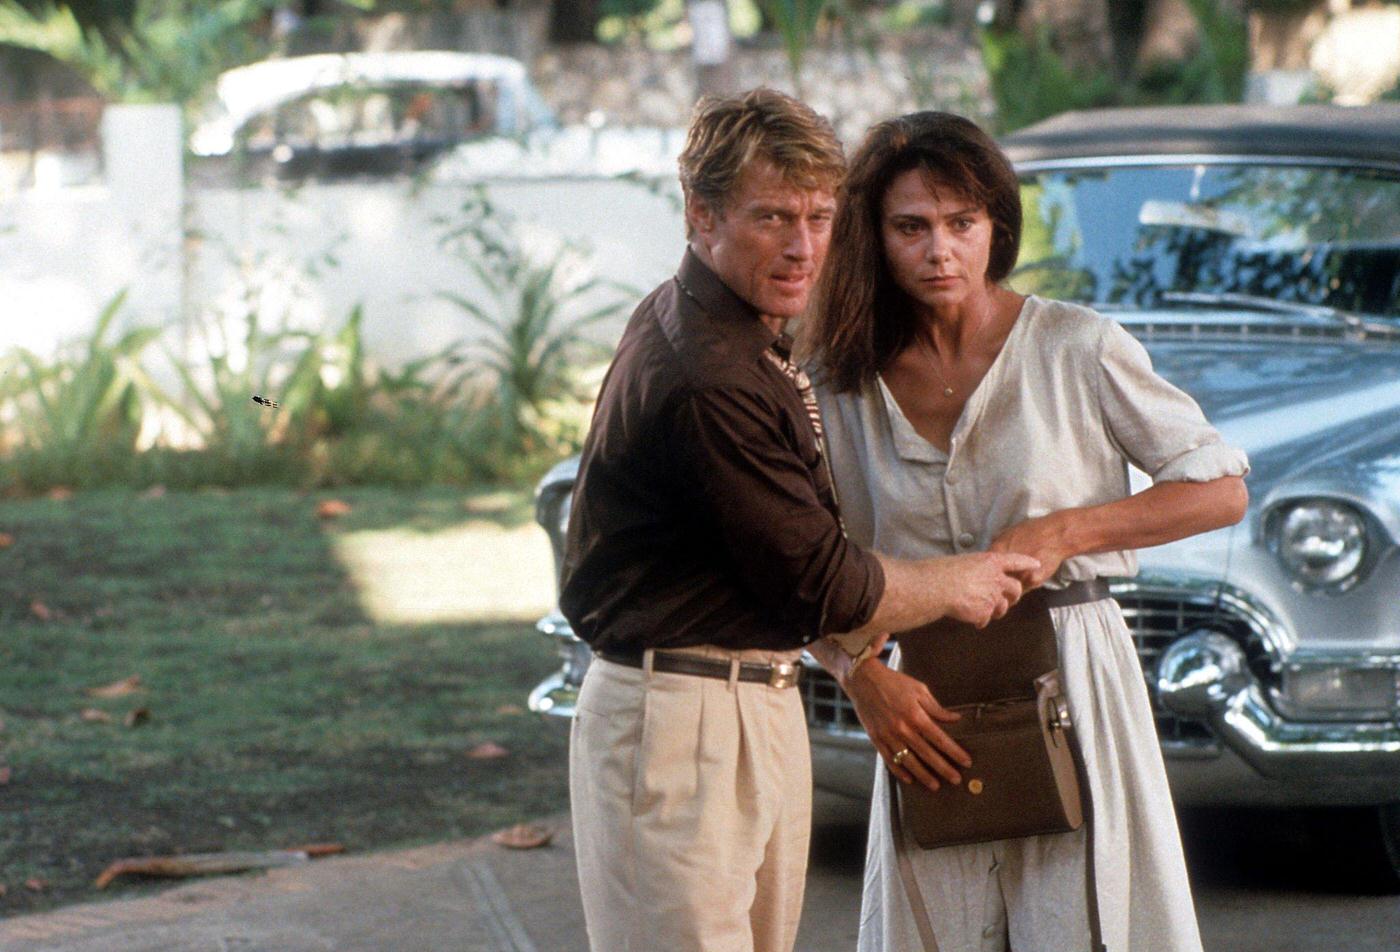 Robert Redford and Lena Olin in a scene from the film 'Havana', 1990.